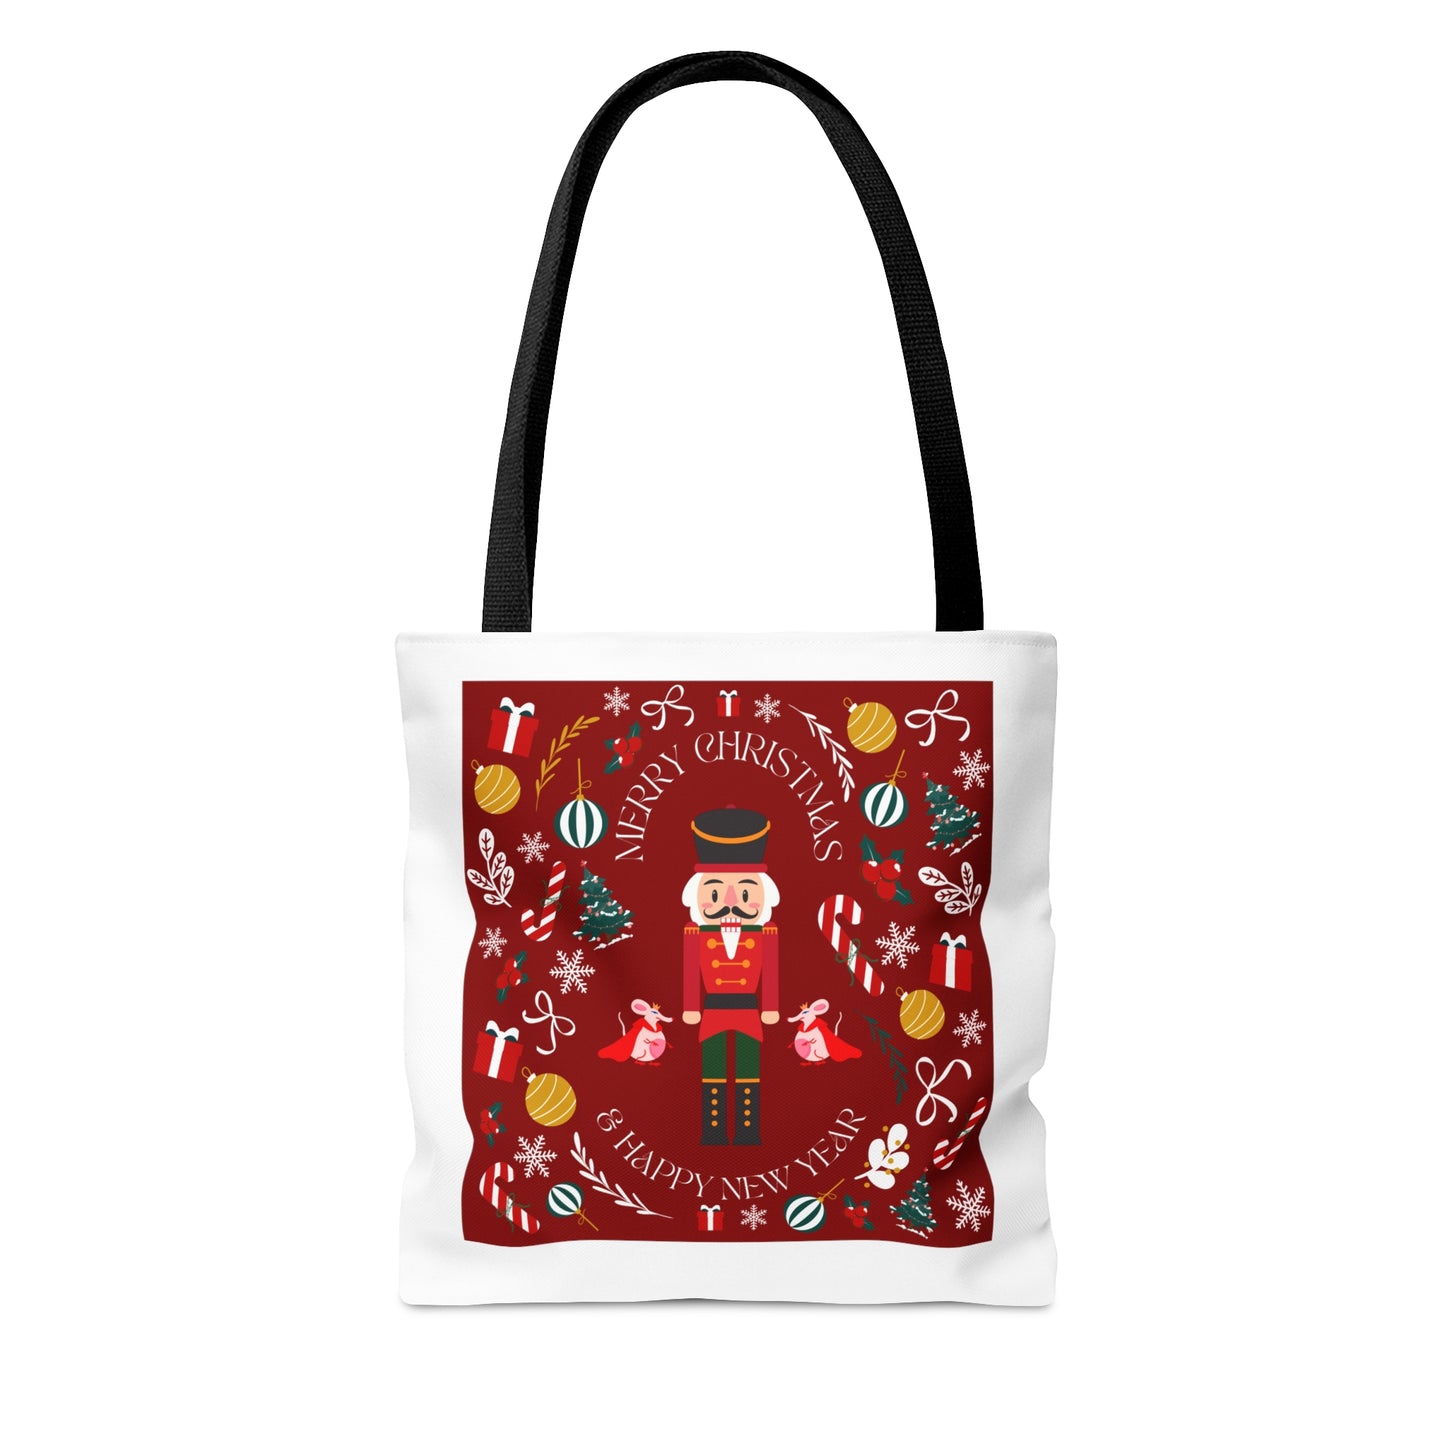 Merry Christmas with Santa Printed Tote Bag